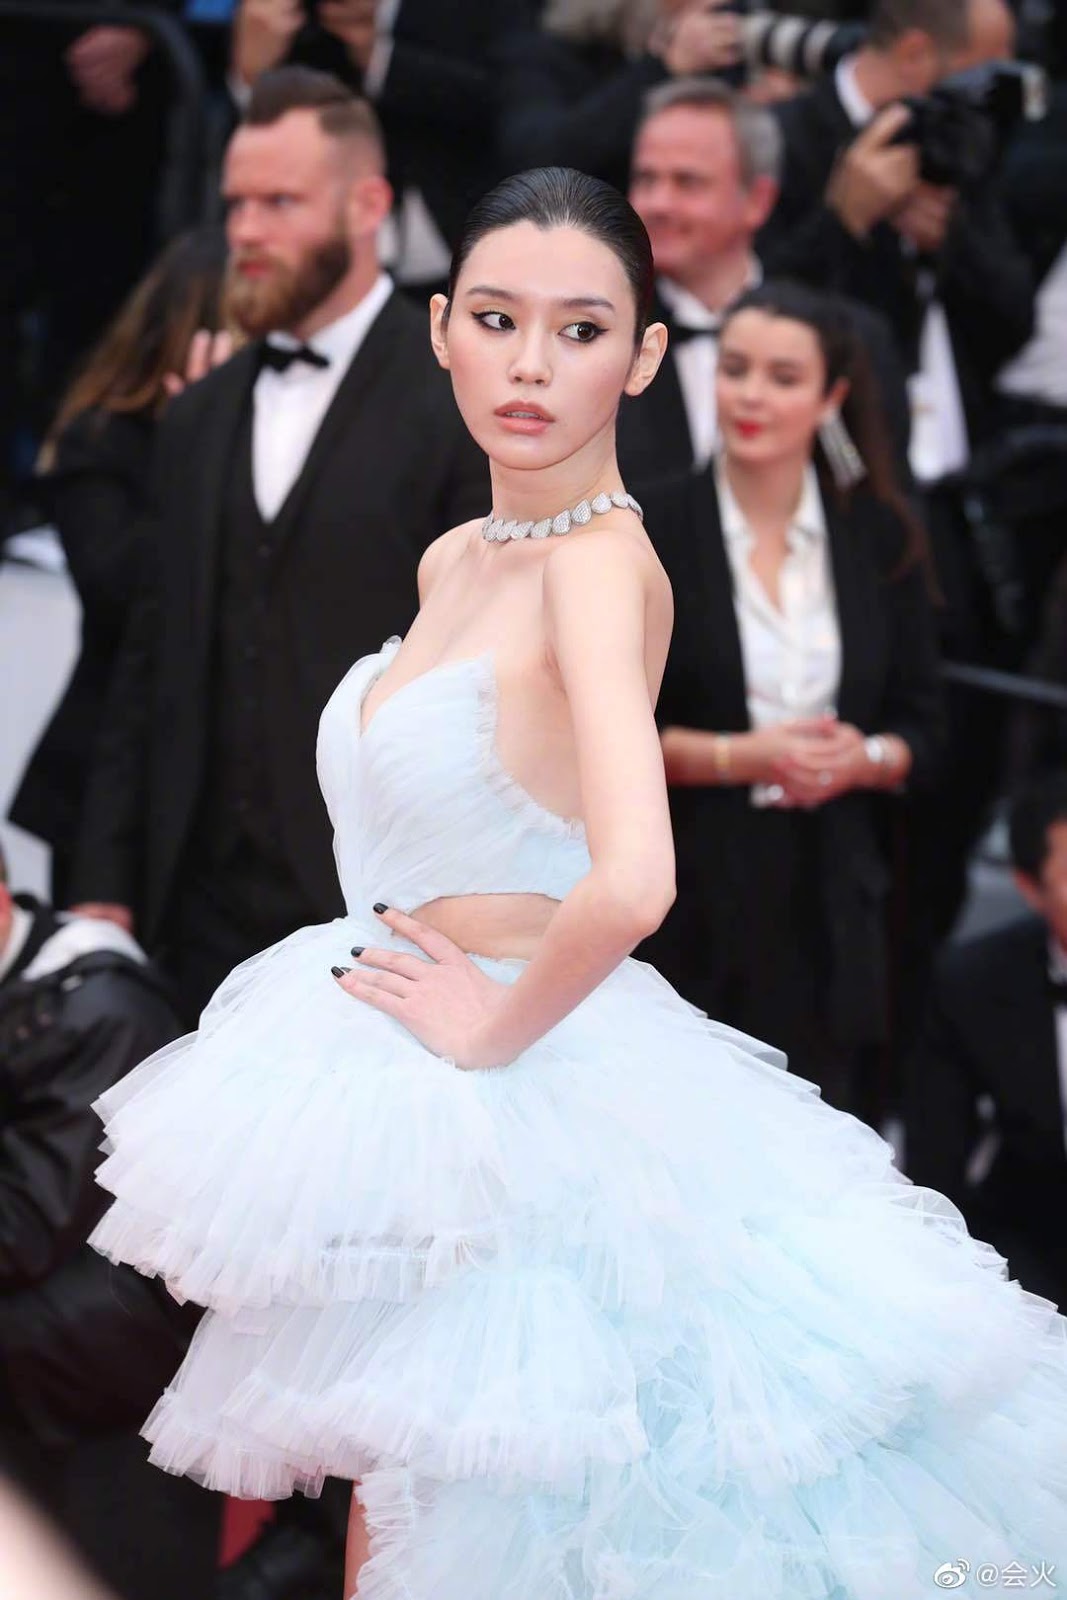 CentKent: Chinese model Ming Xi, aka Xi Mengyao, makes an appearance at ...